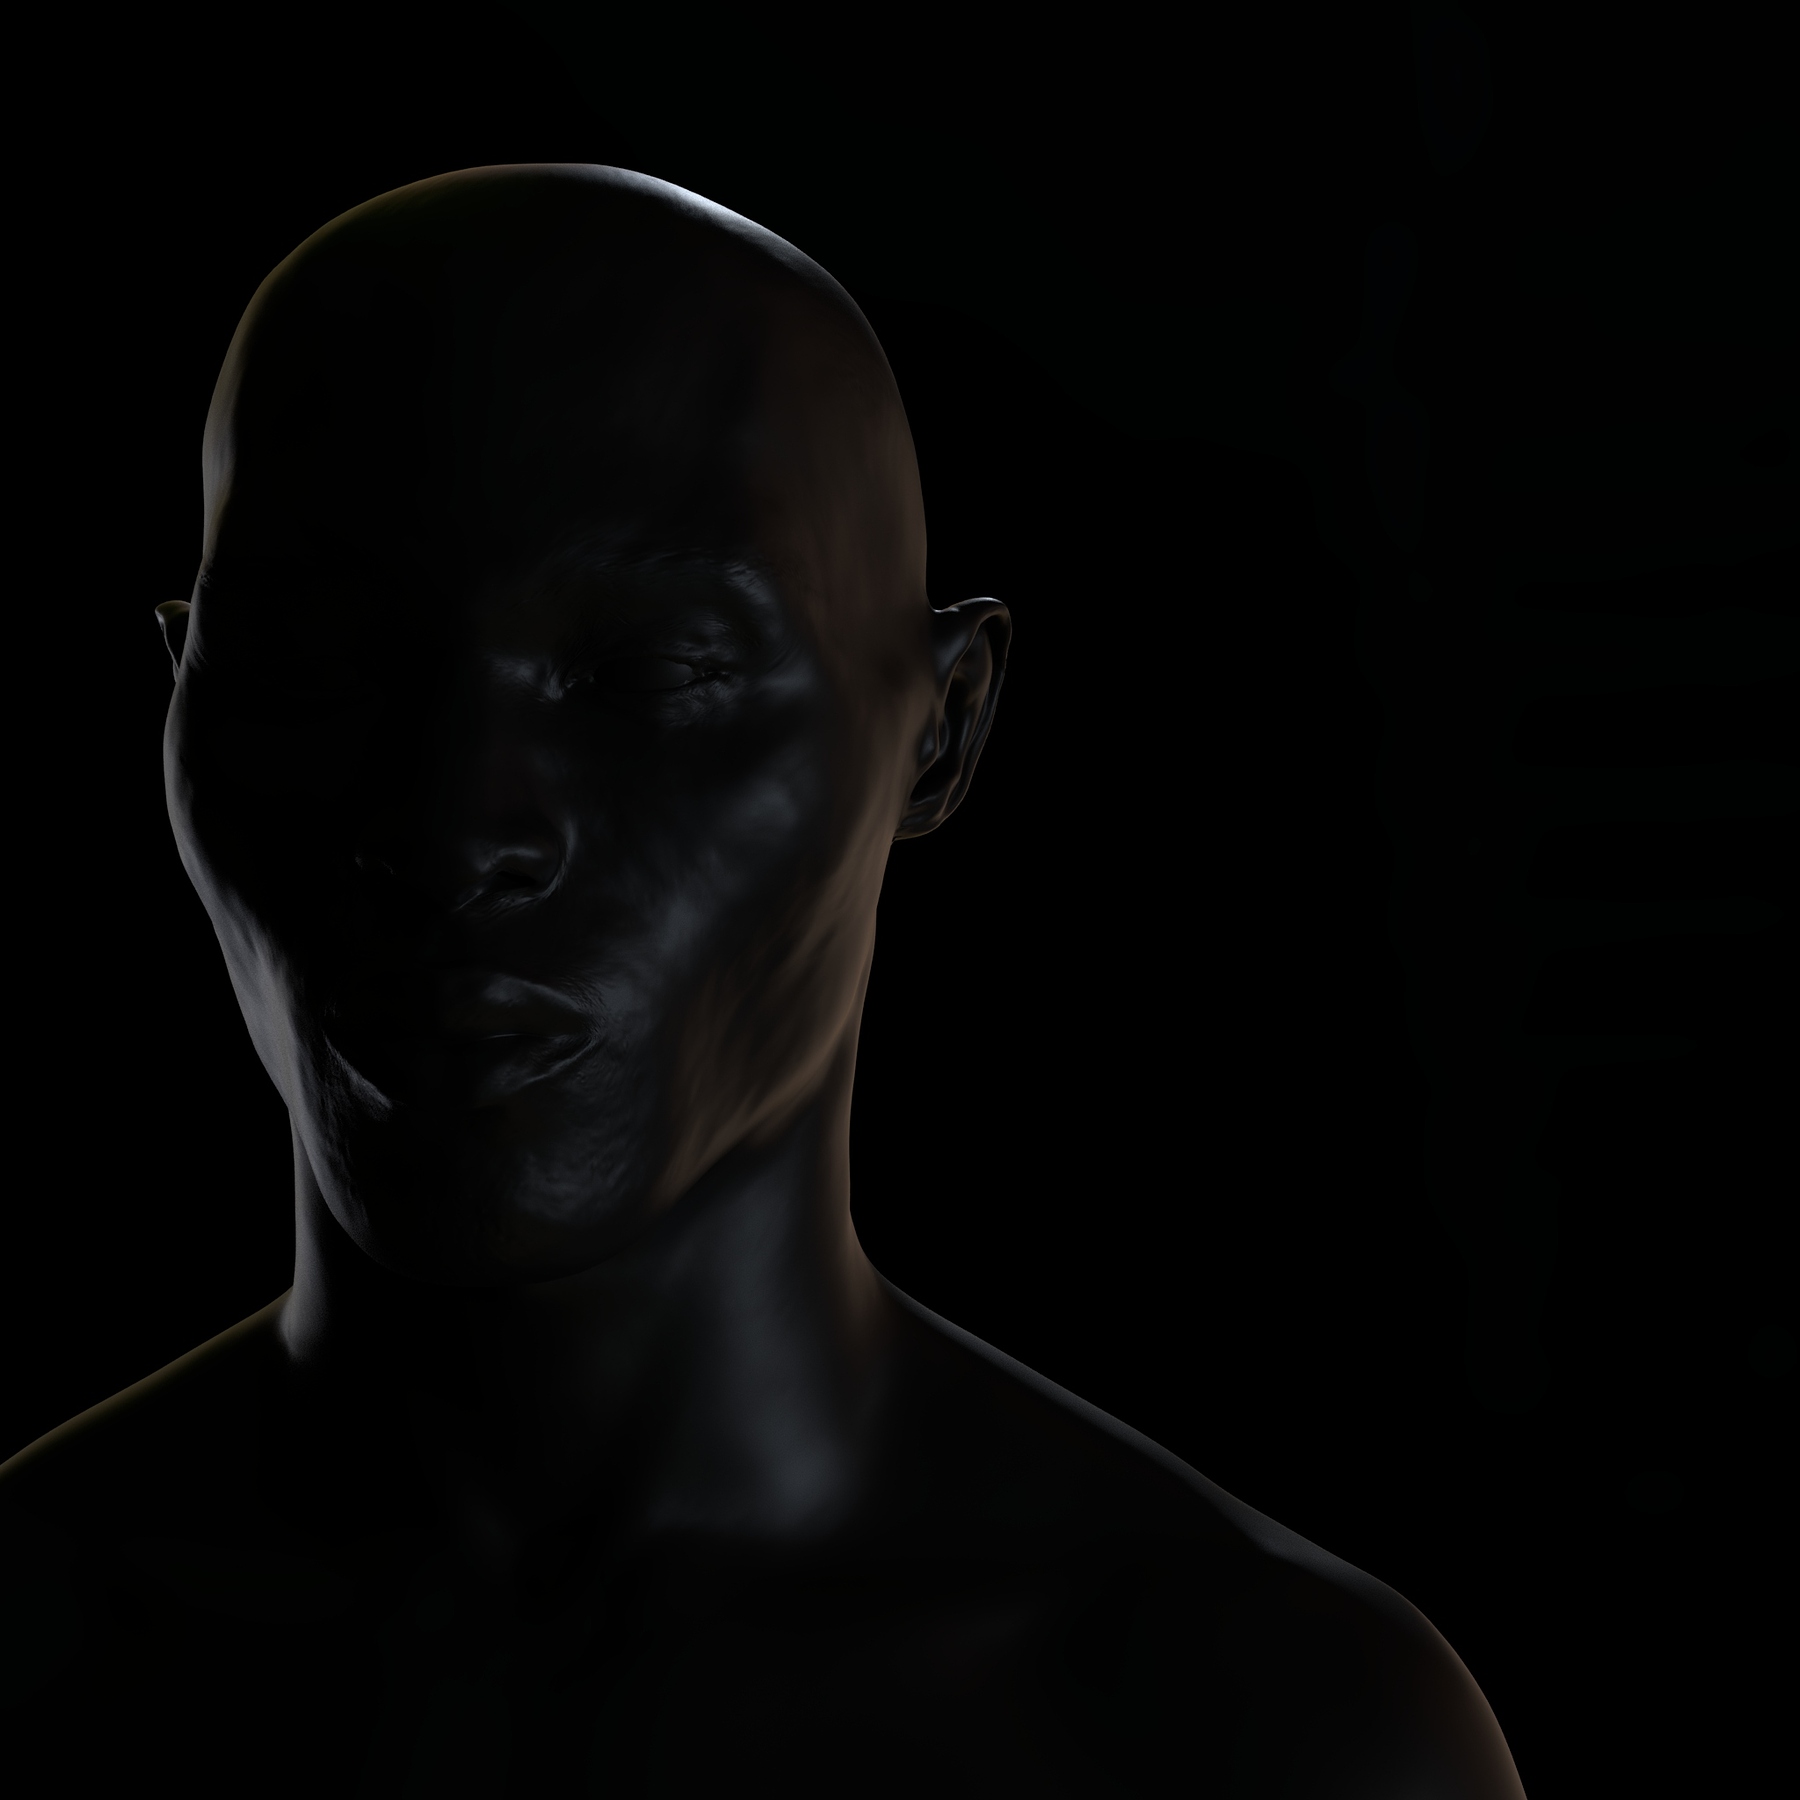 zbrush model turned black